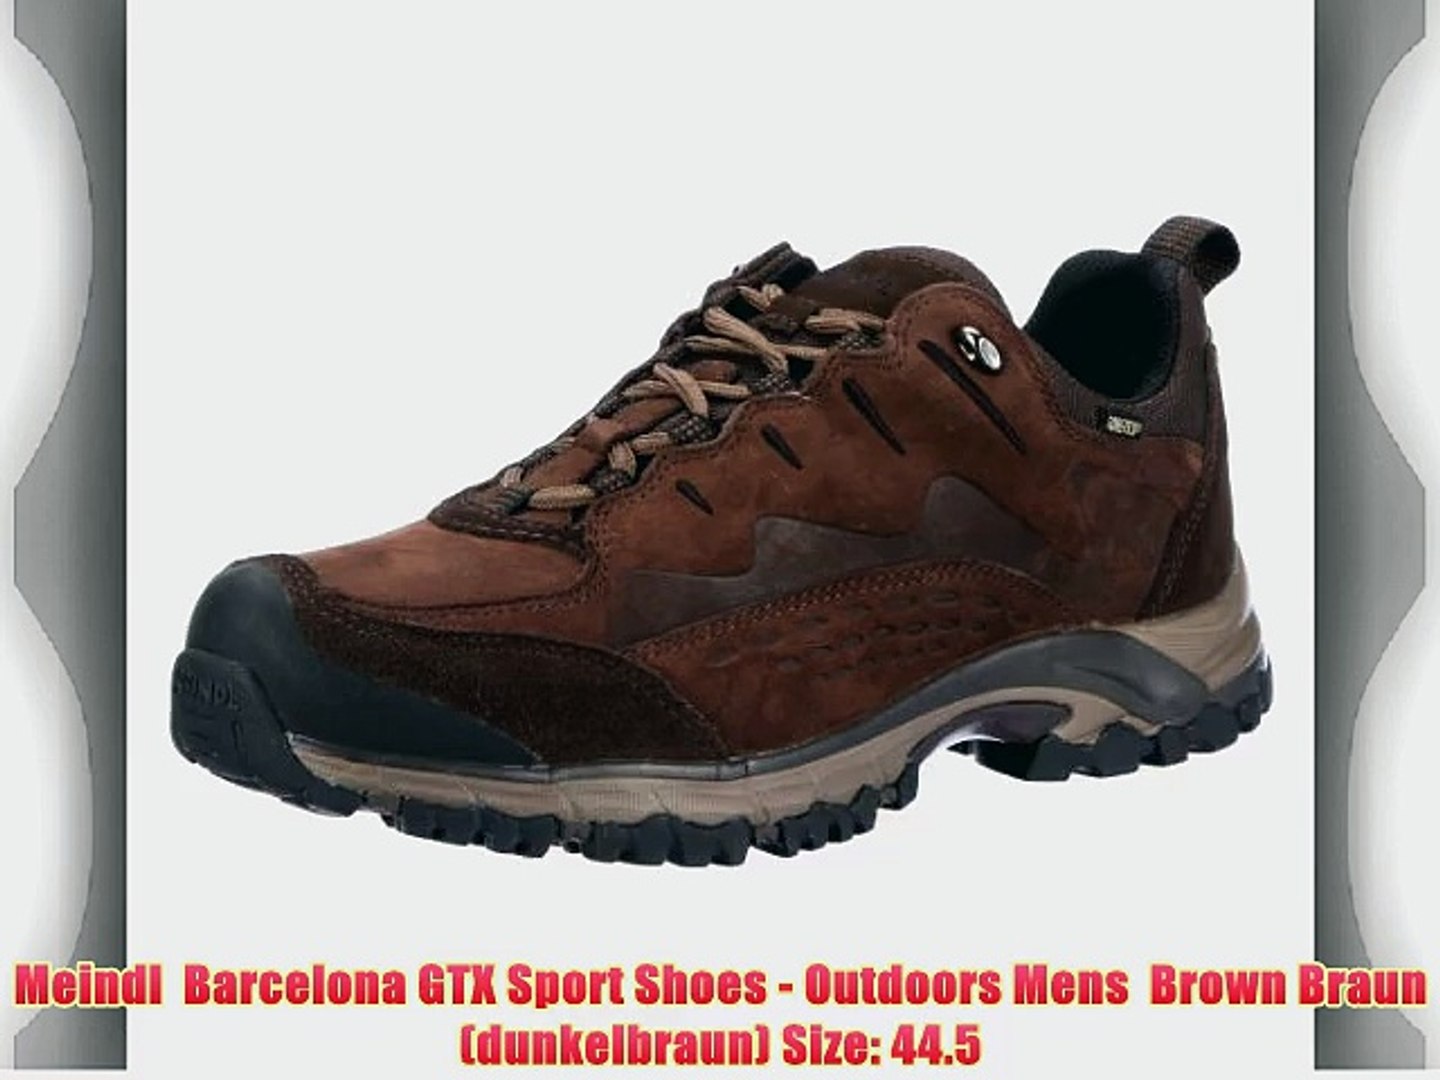 Meindl Barcelona GTX Sport Shoes - Outdoors Mens Brown Braun (dunkelbraun)  Size: 44.5 - video Dailymotion